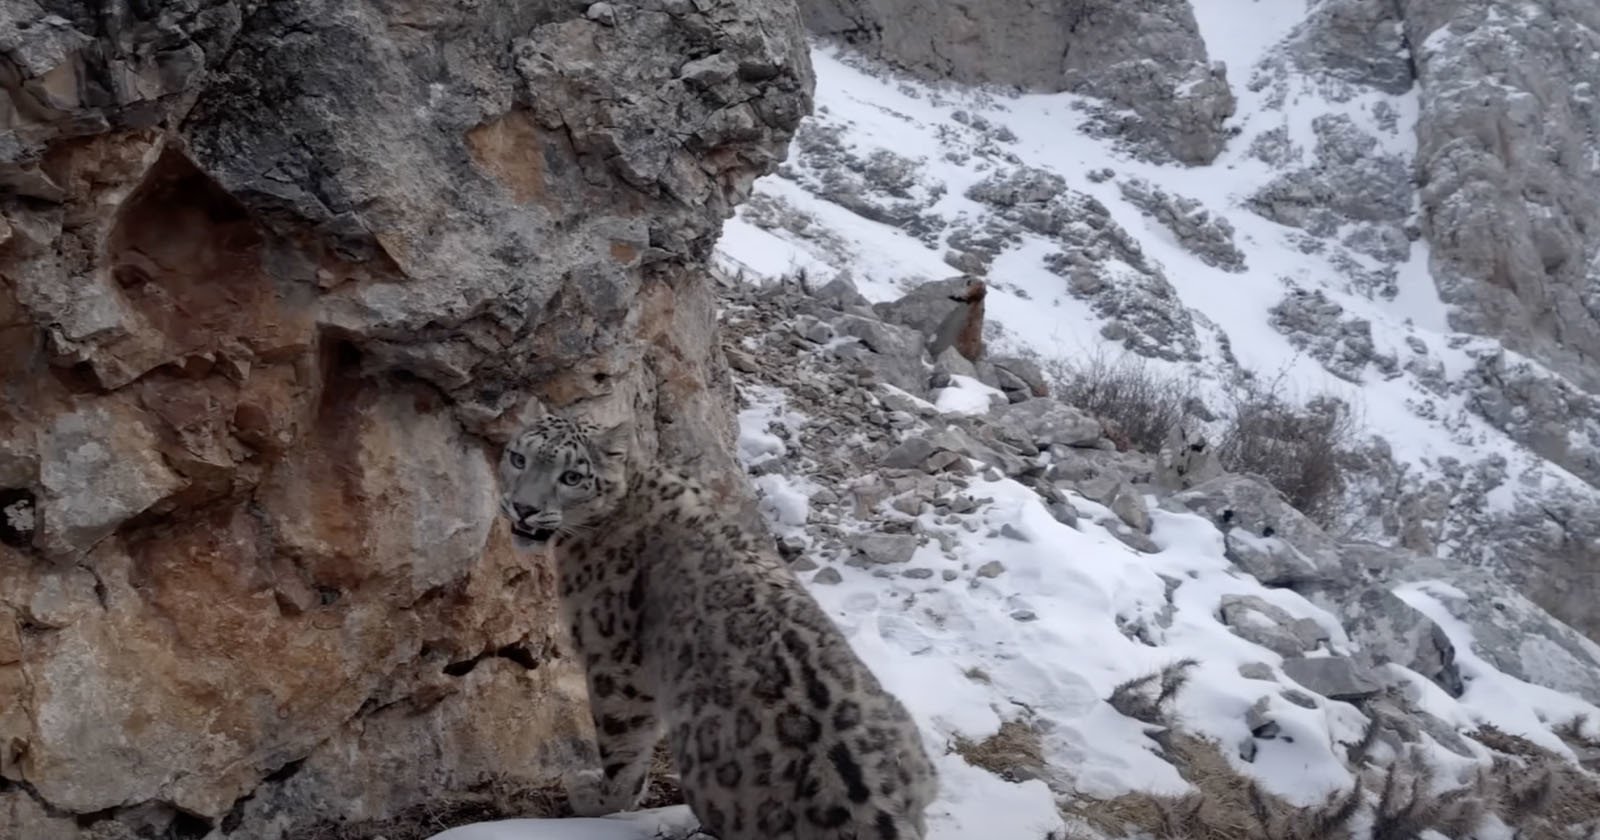  bbc struggle film snow leopard among cat-colored rocks 